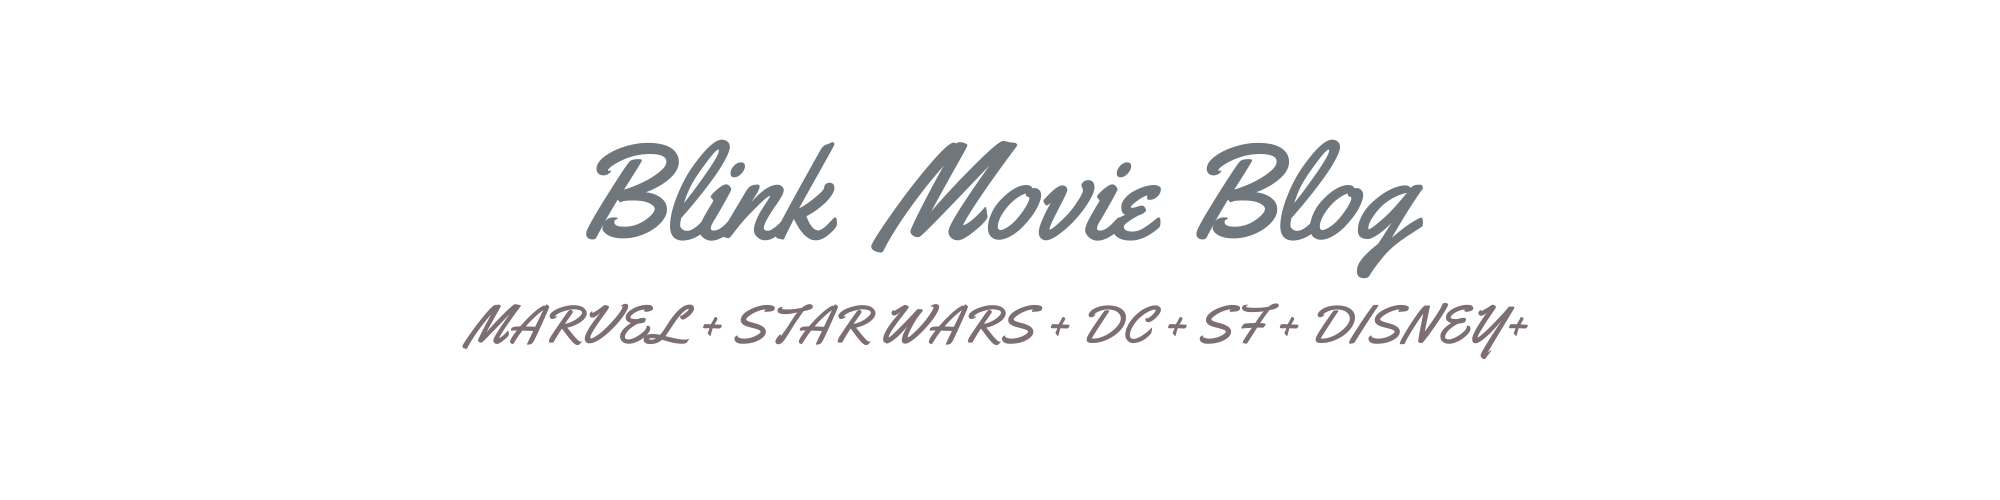 Blink Movie Blog